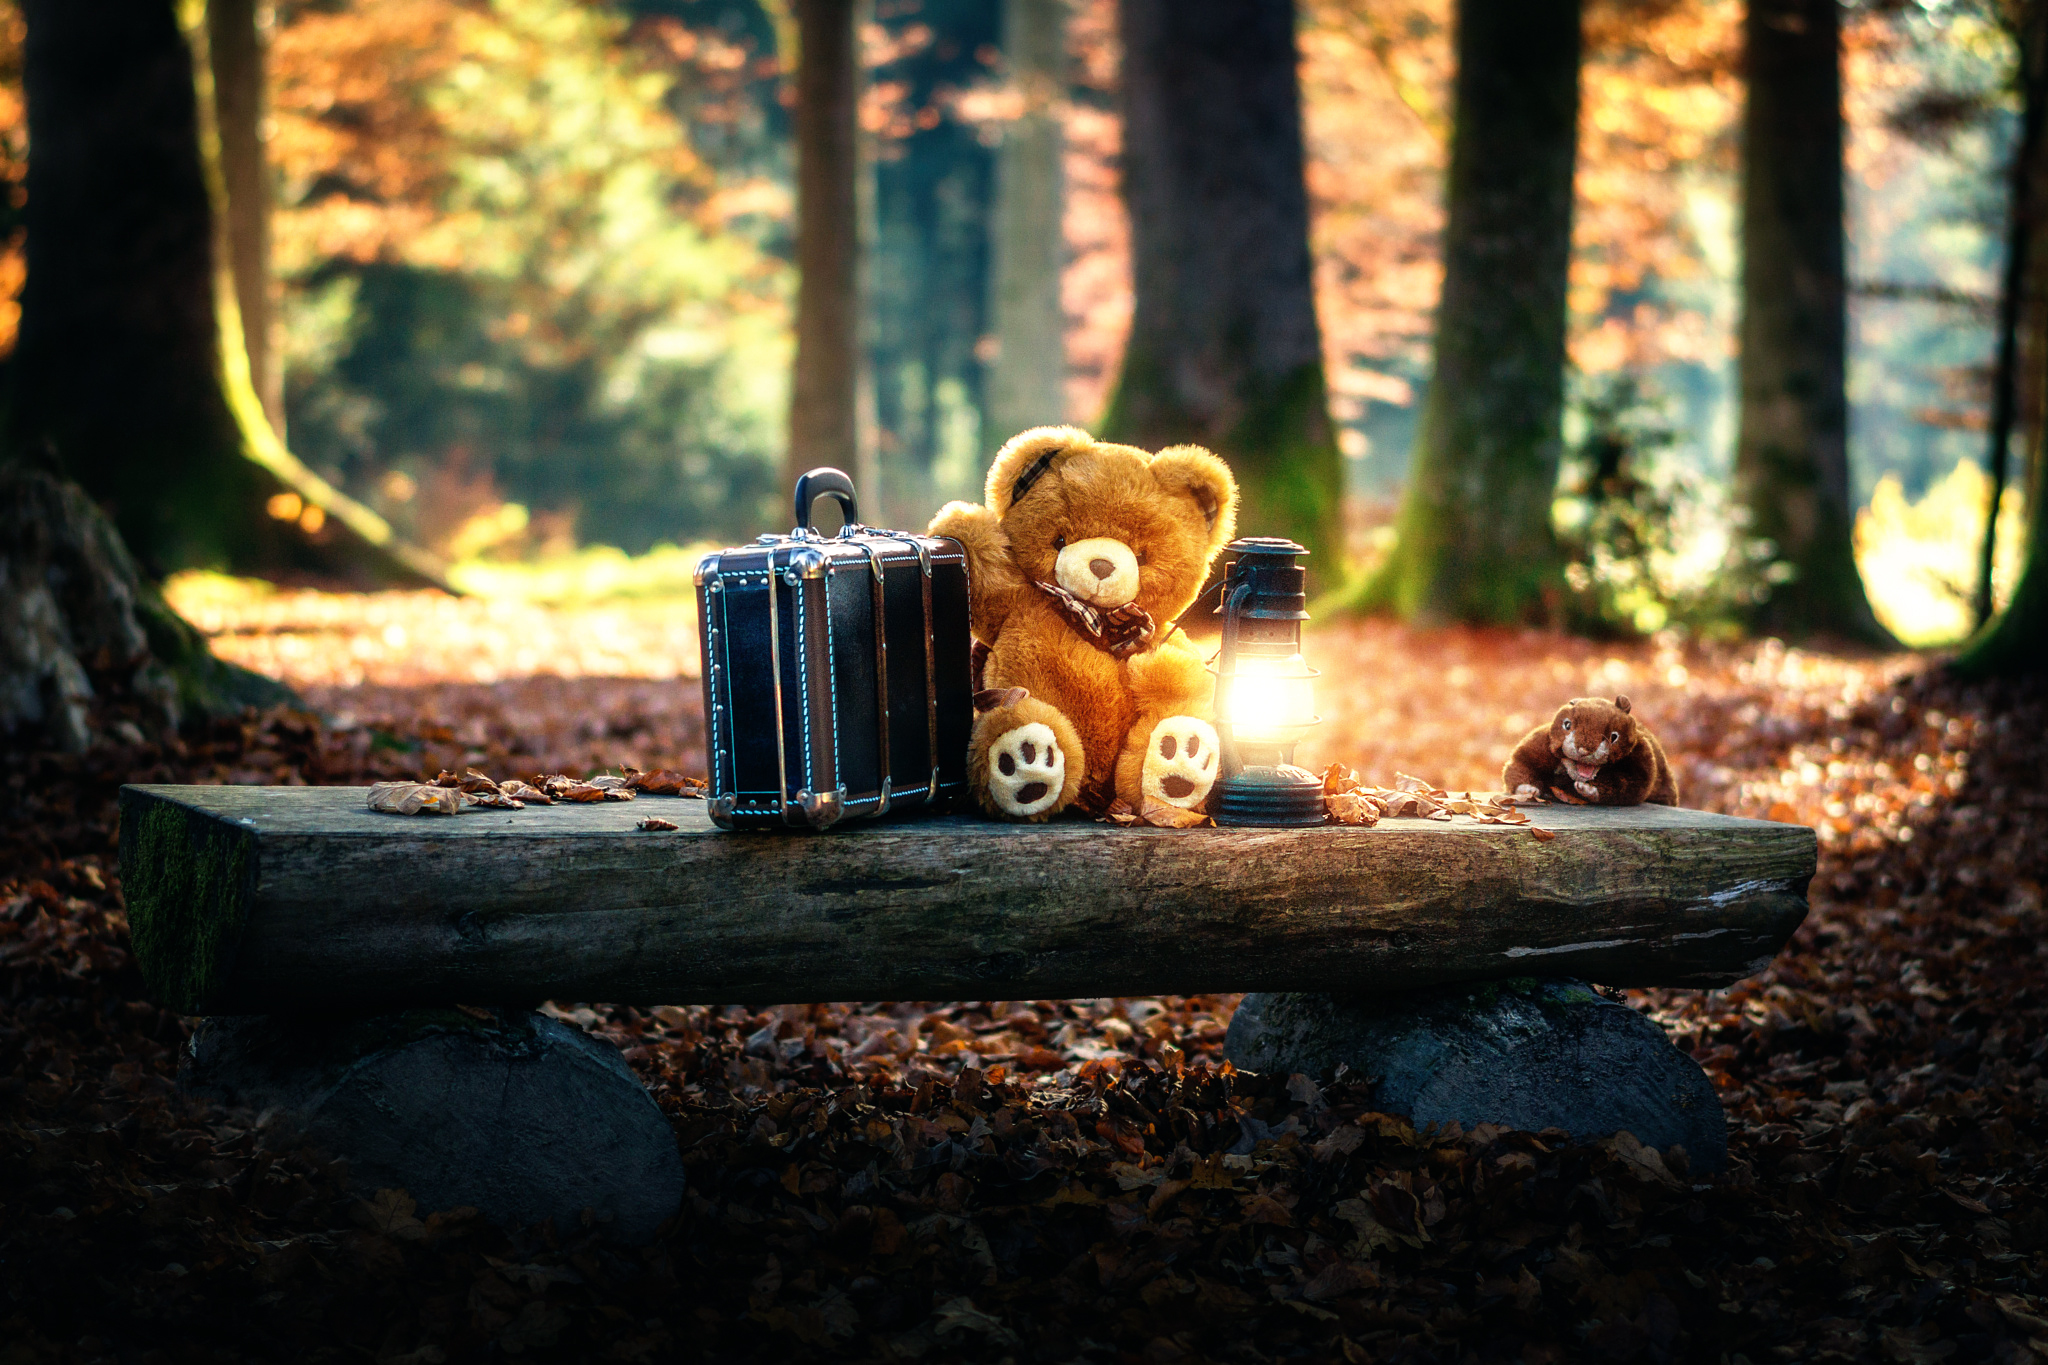 man made, stuffed animal, bench, lantern, suitcase, teddy bear